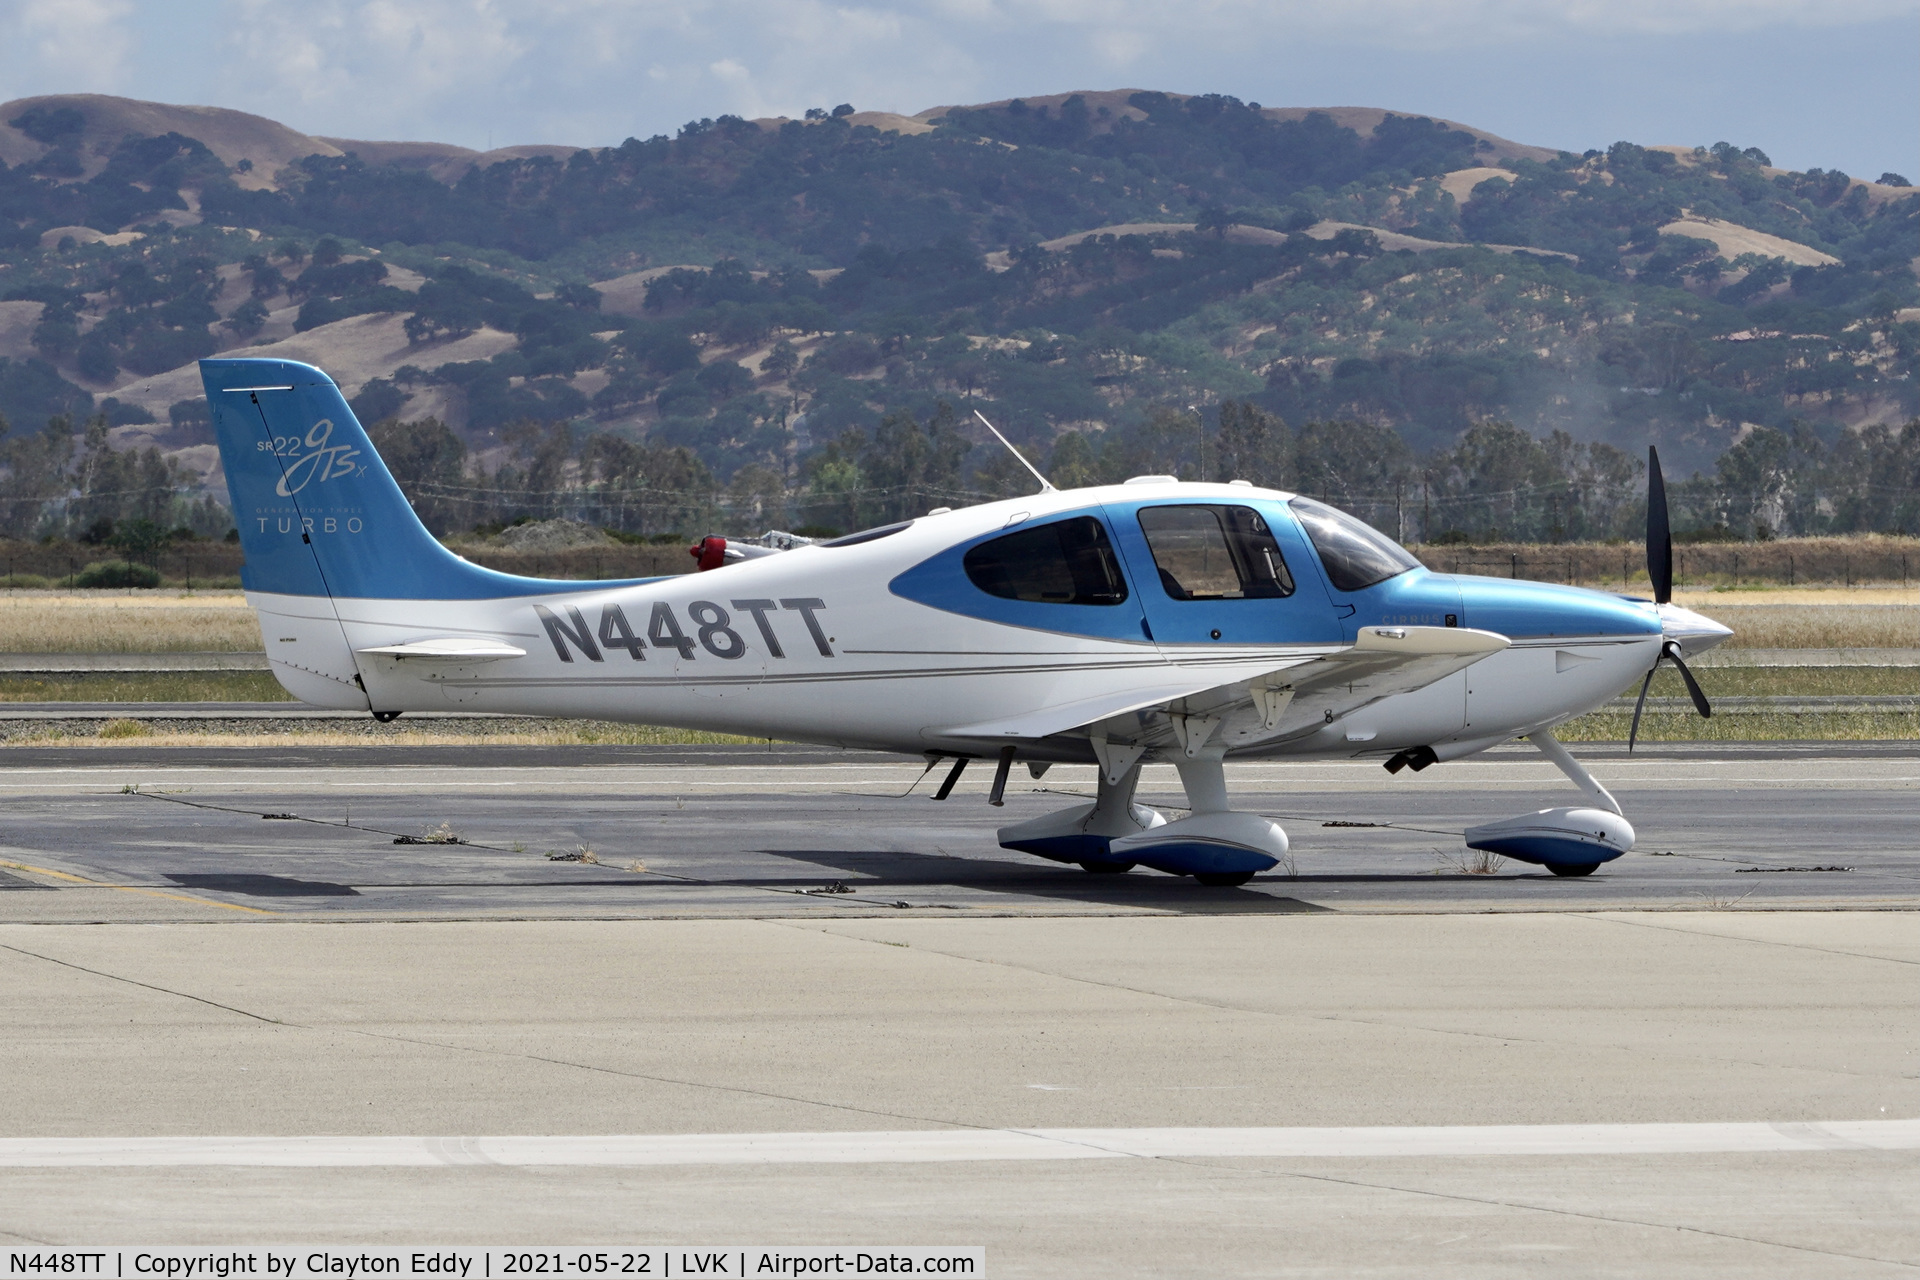 N448TT, 2008 Cirrus SR22 G3 GTSX Turbo C/N 3073, Livermore Airport California 2021.